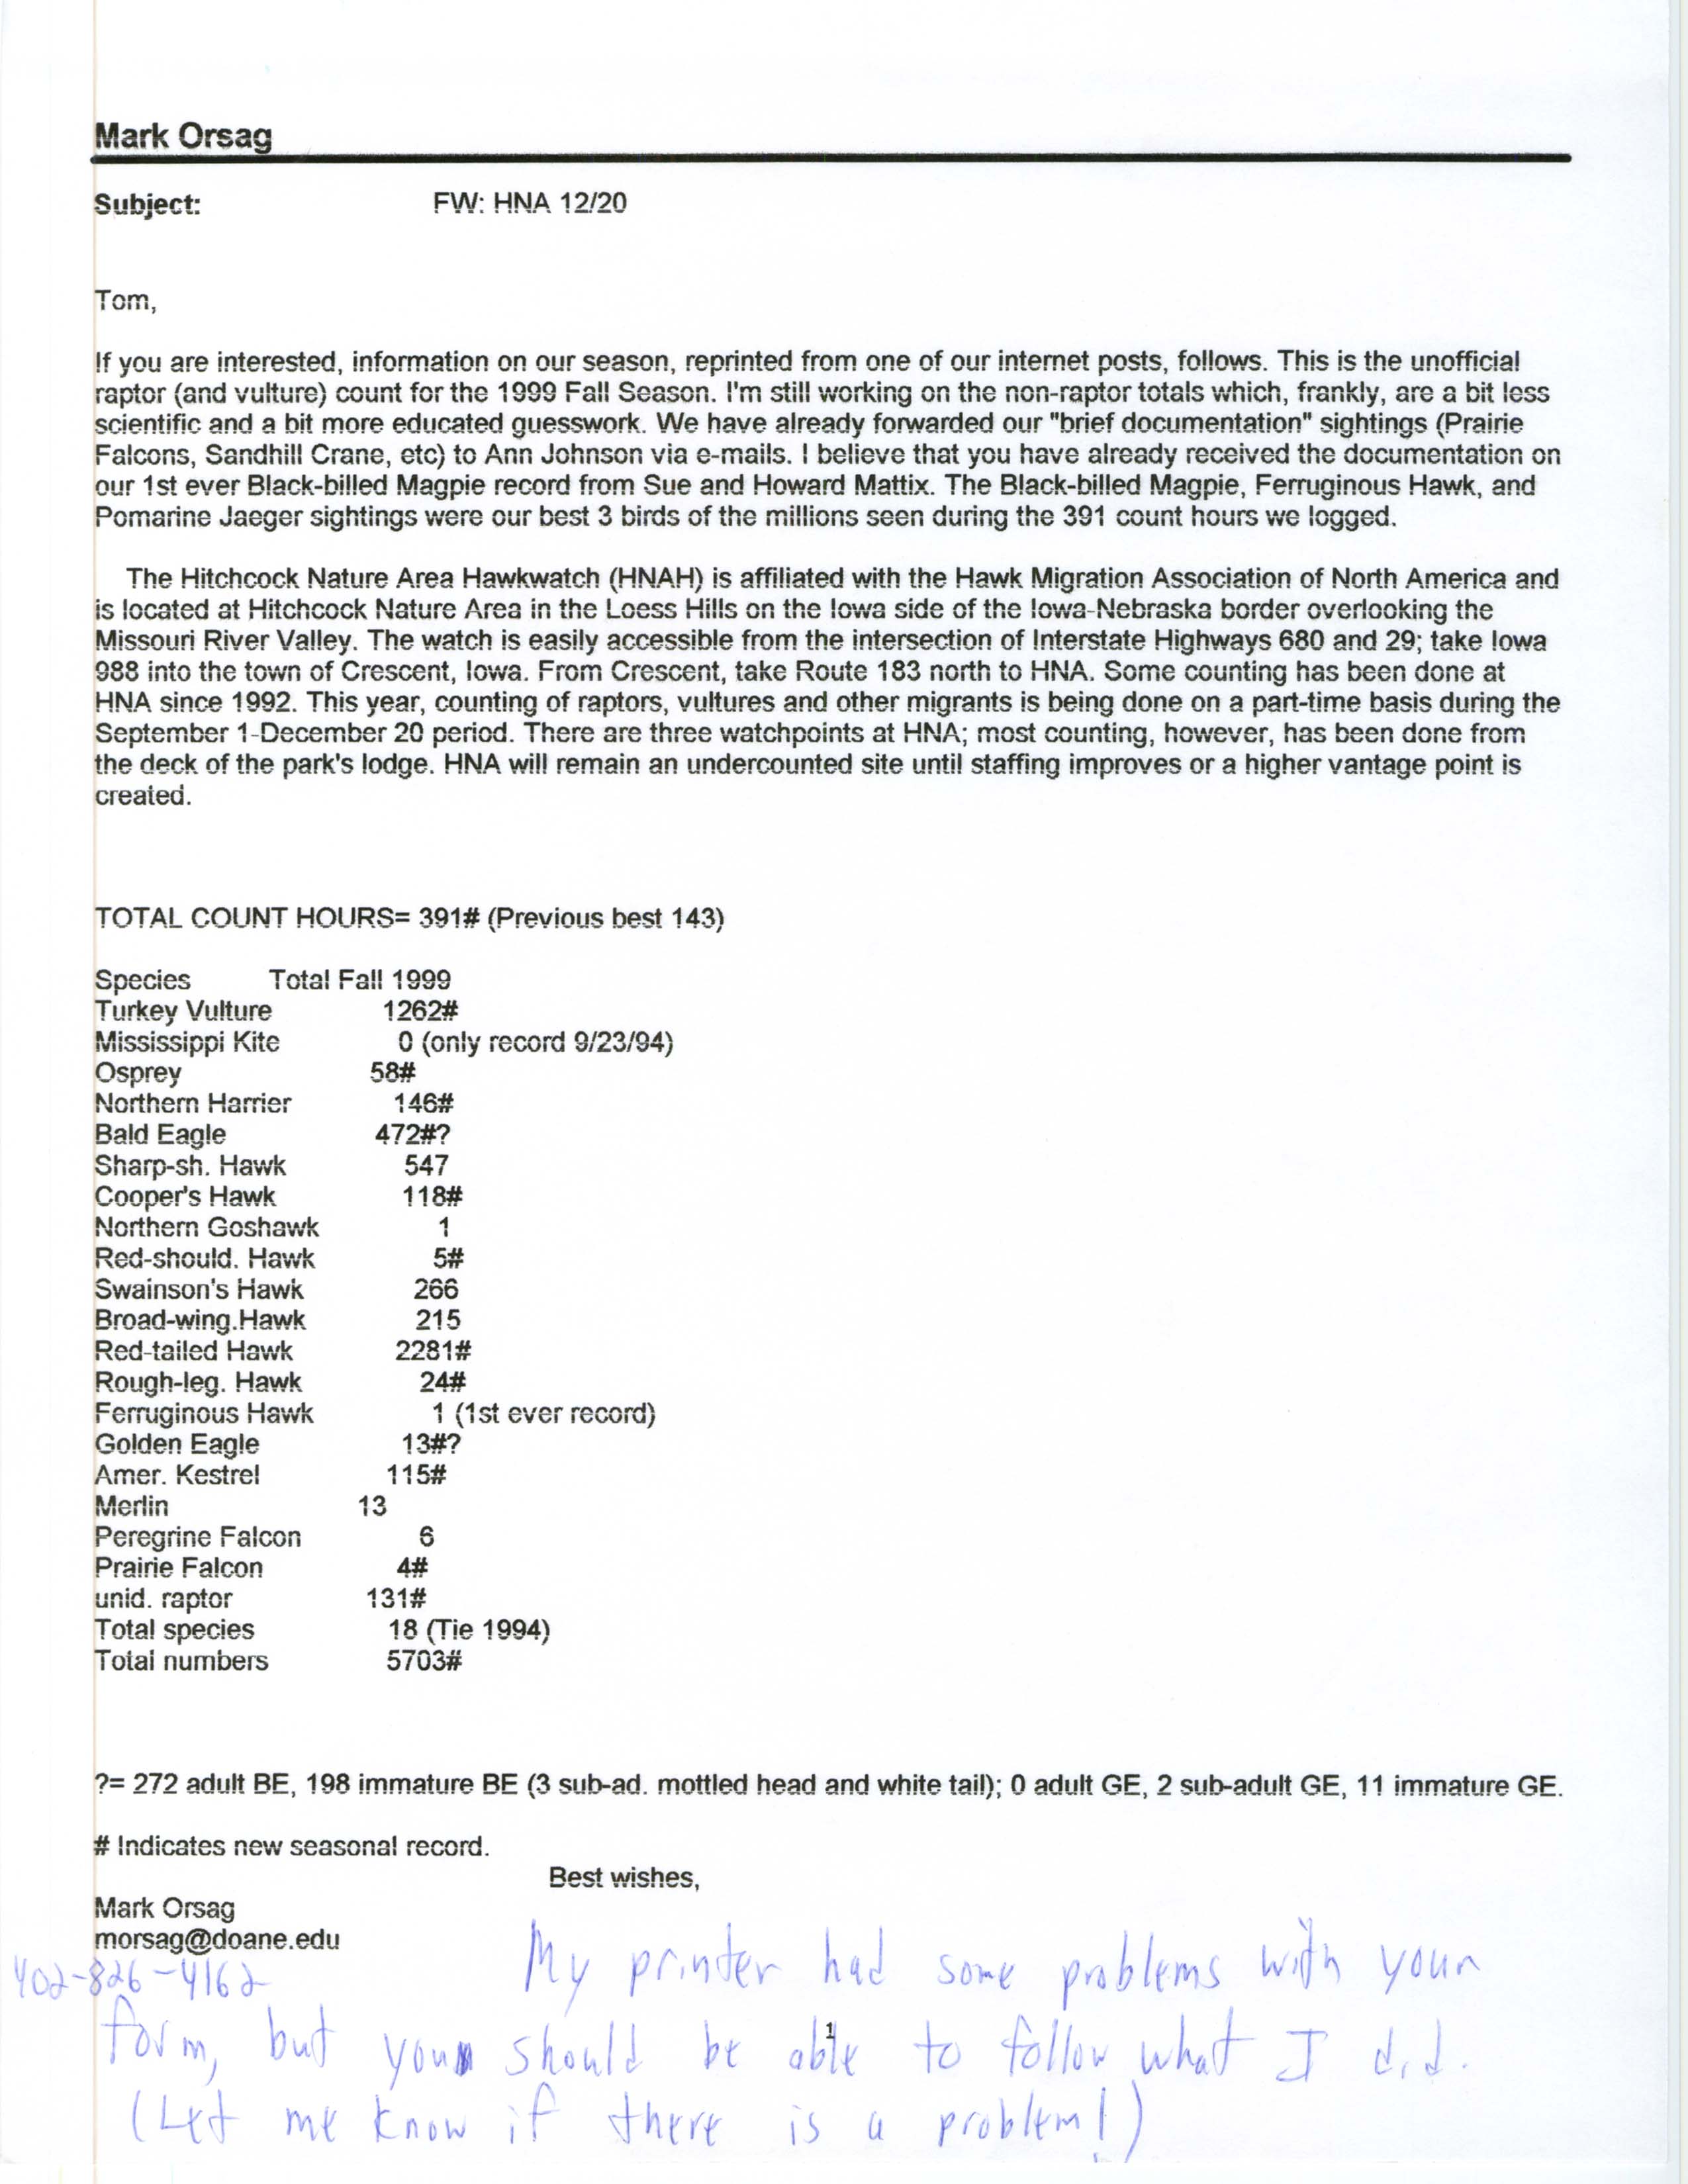 Mark Orsag email to Thomas Kent regarding Hitchcock Nature Area Hawkwatch, December 20, 1999